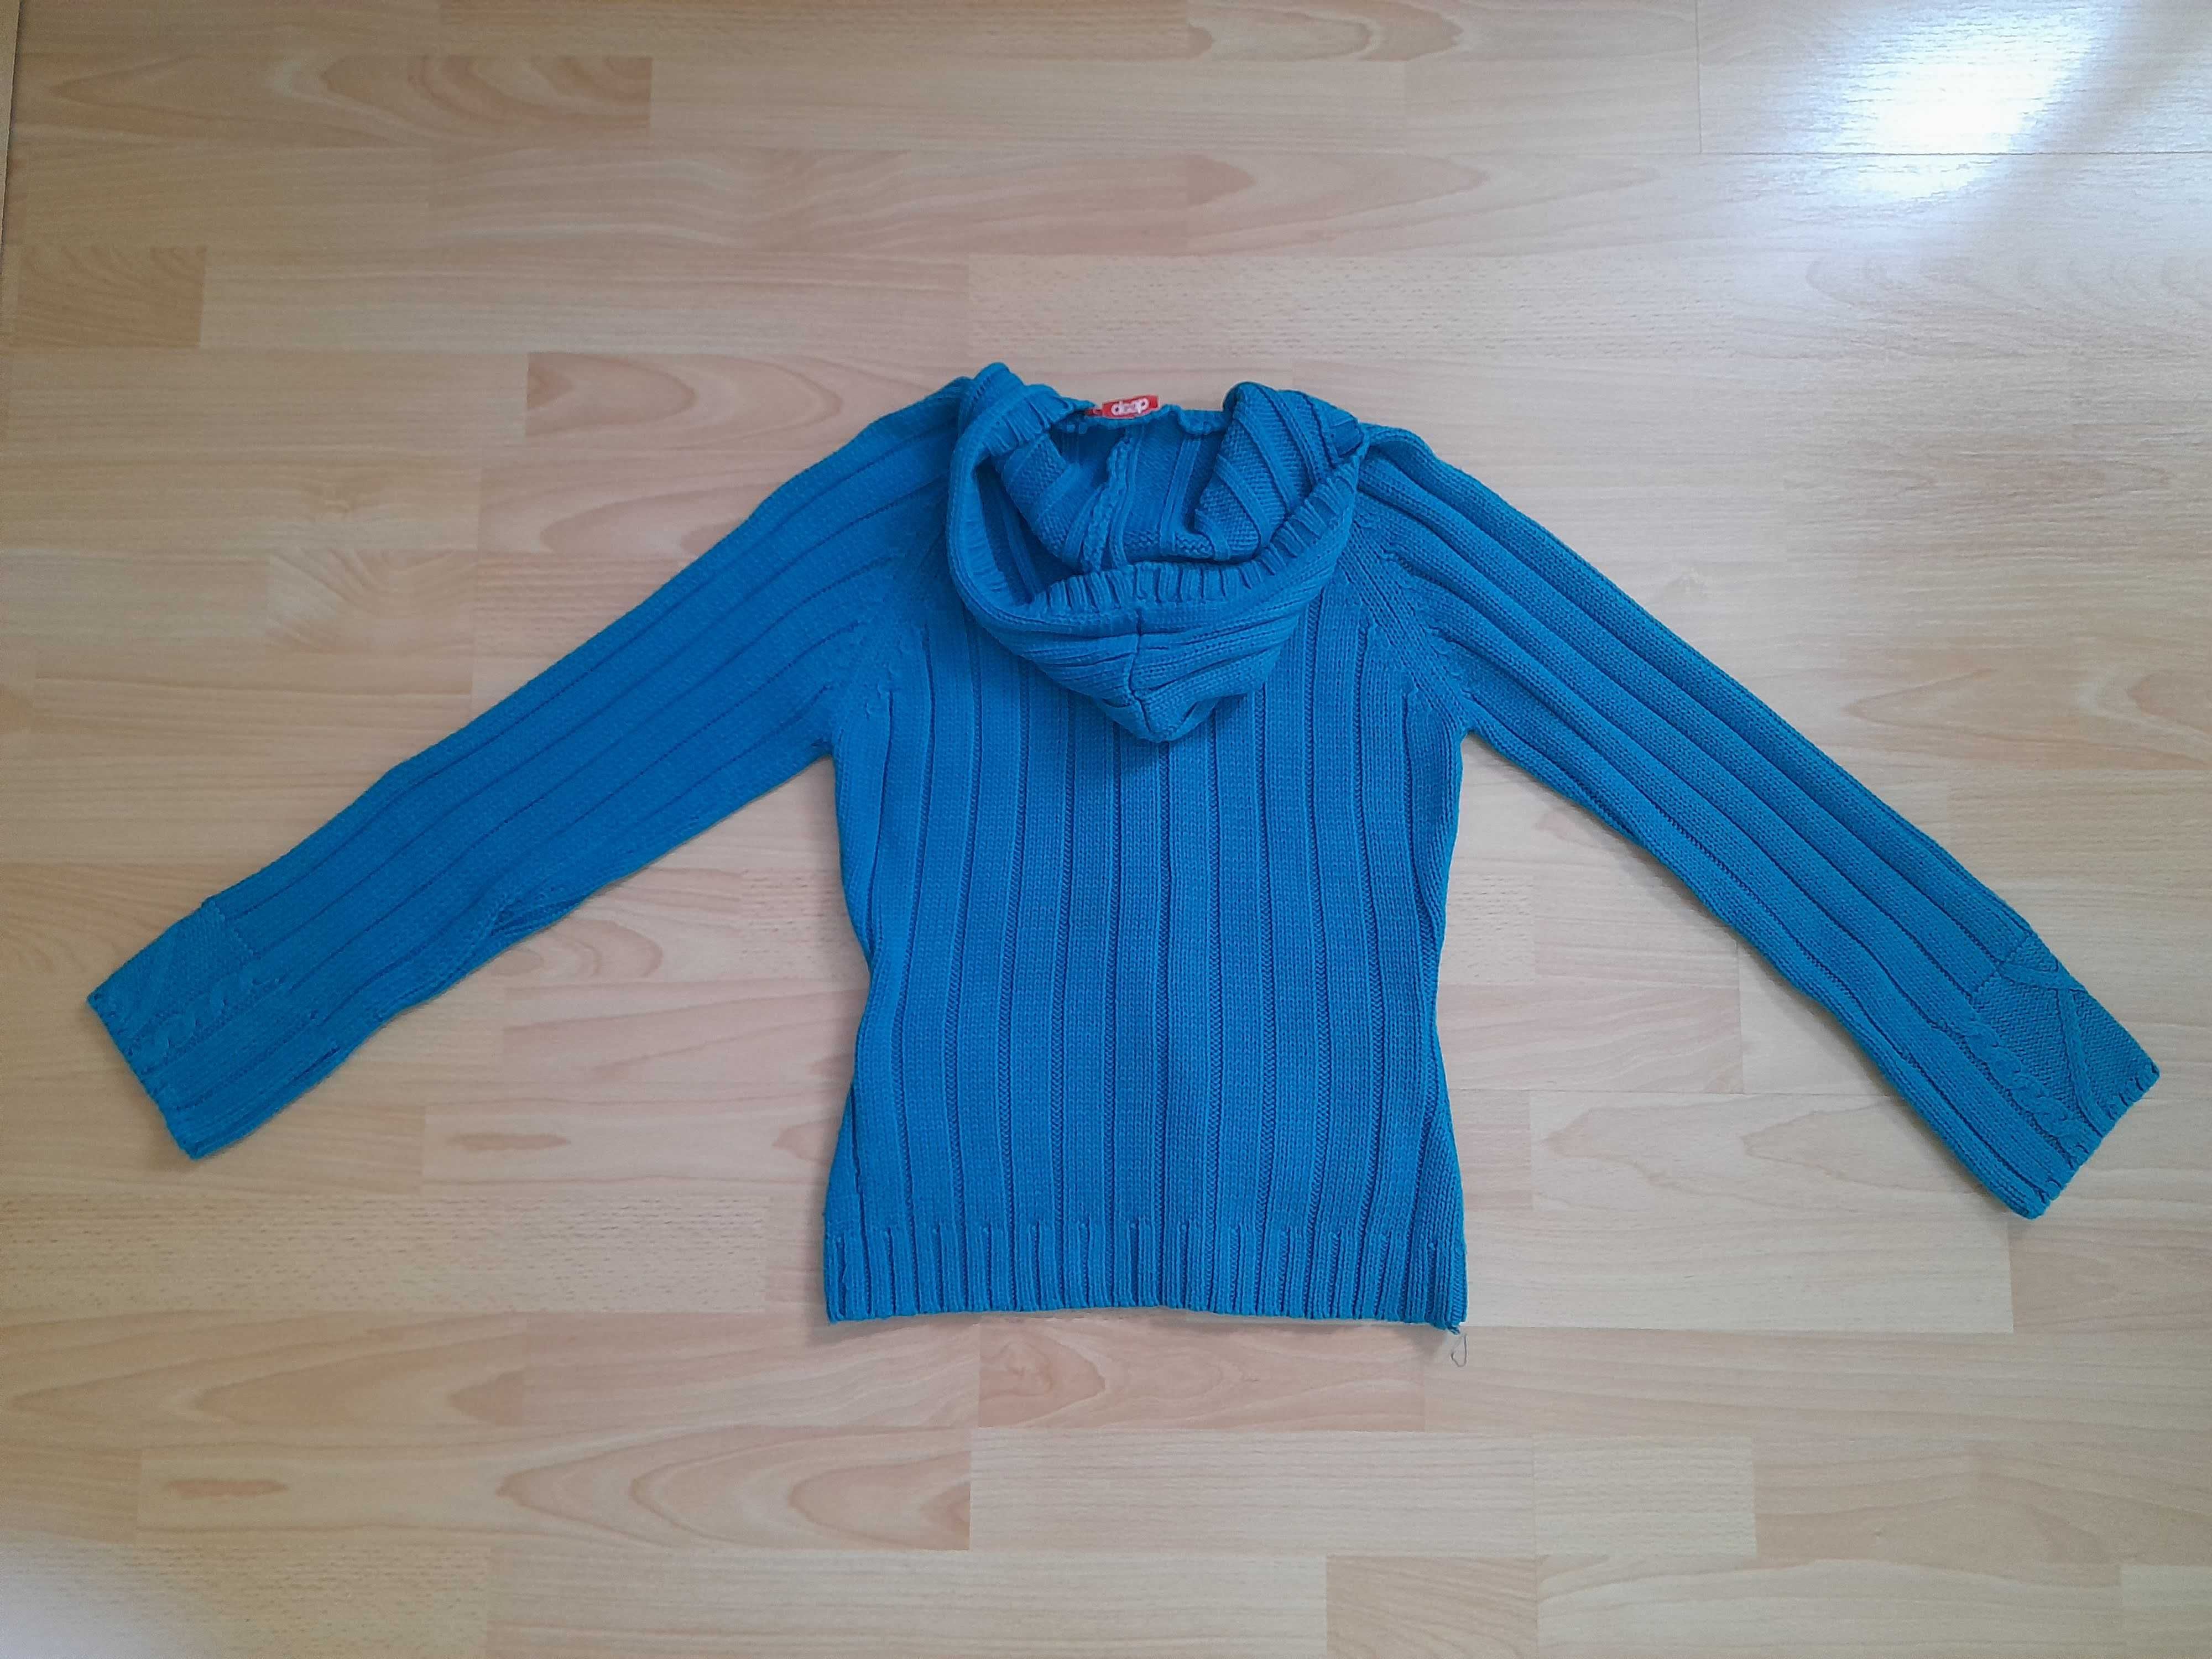 Gruby ciepły damski sweter kaptur Deep r.S M pachy 43cm x 2 turkus